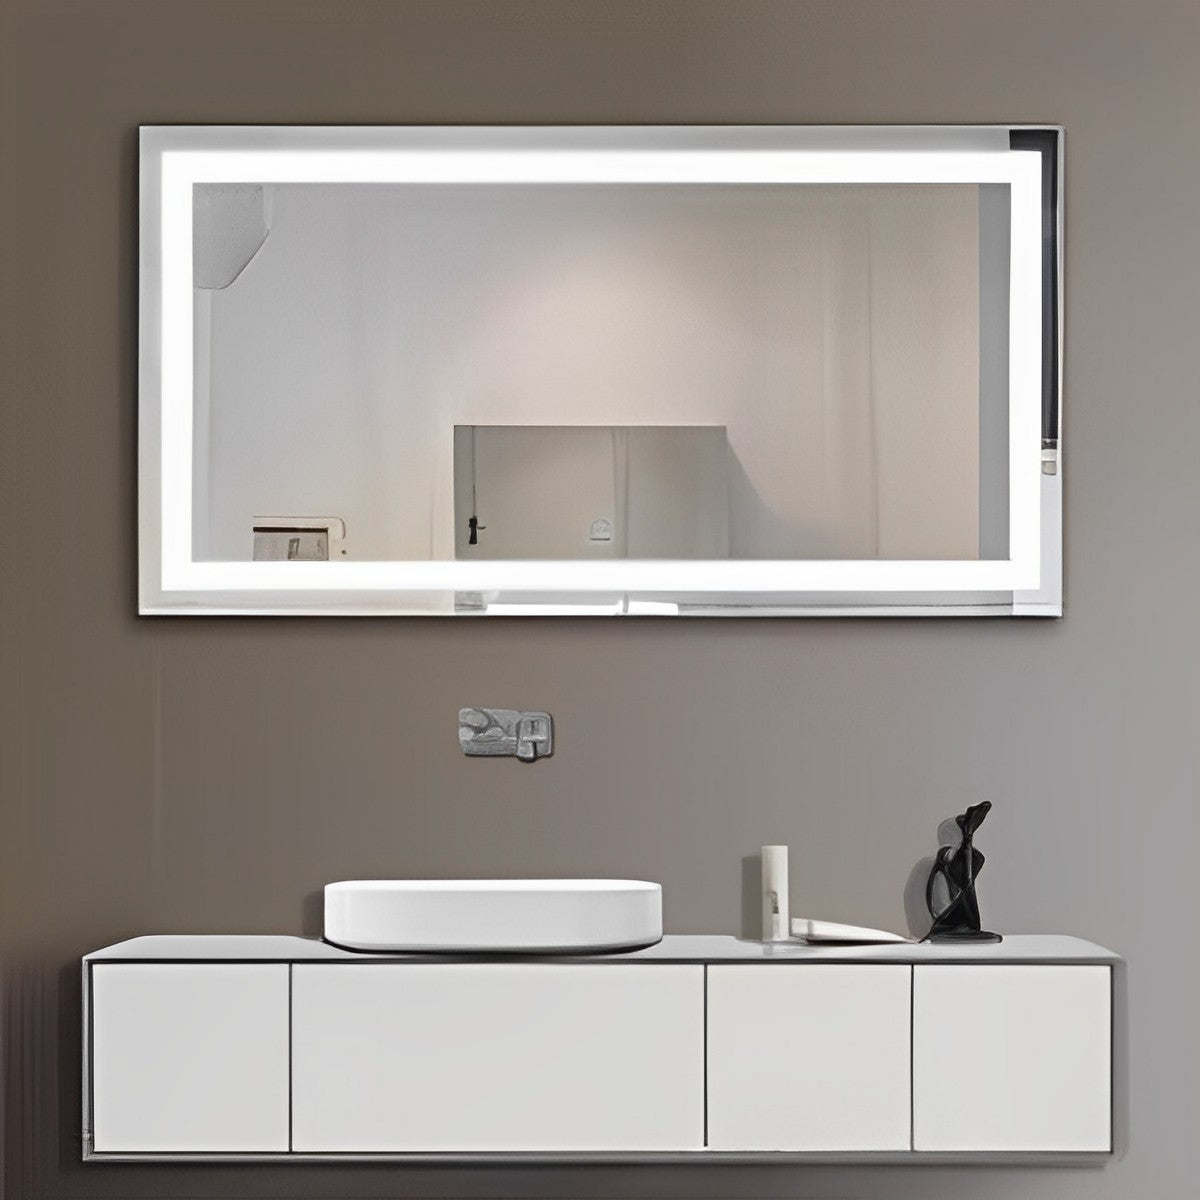 43" Horizontal Hanging Mirror with LED Light MSL-105 - RenoShop